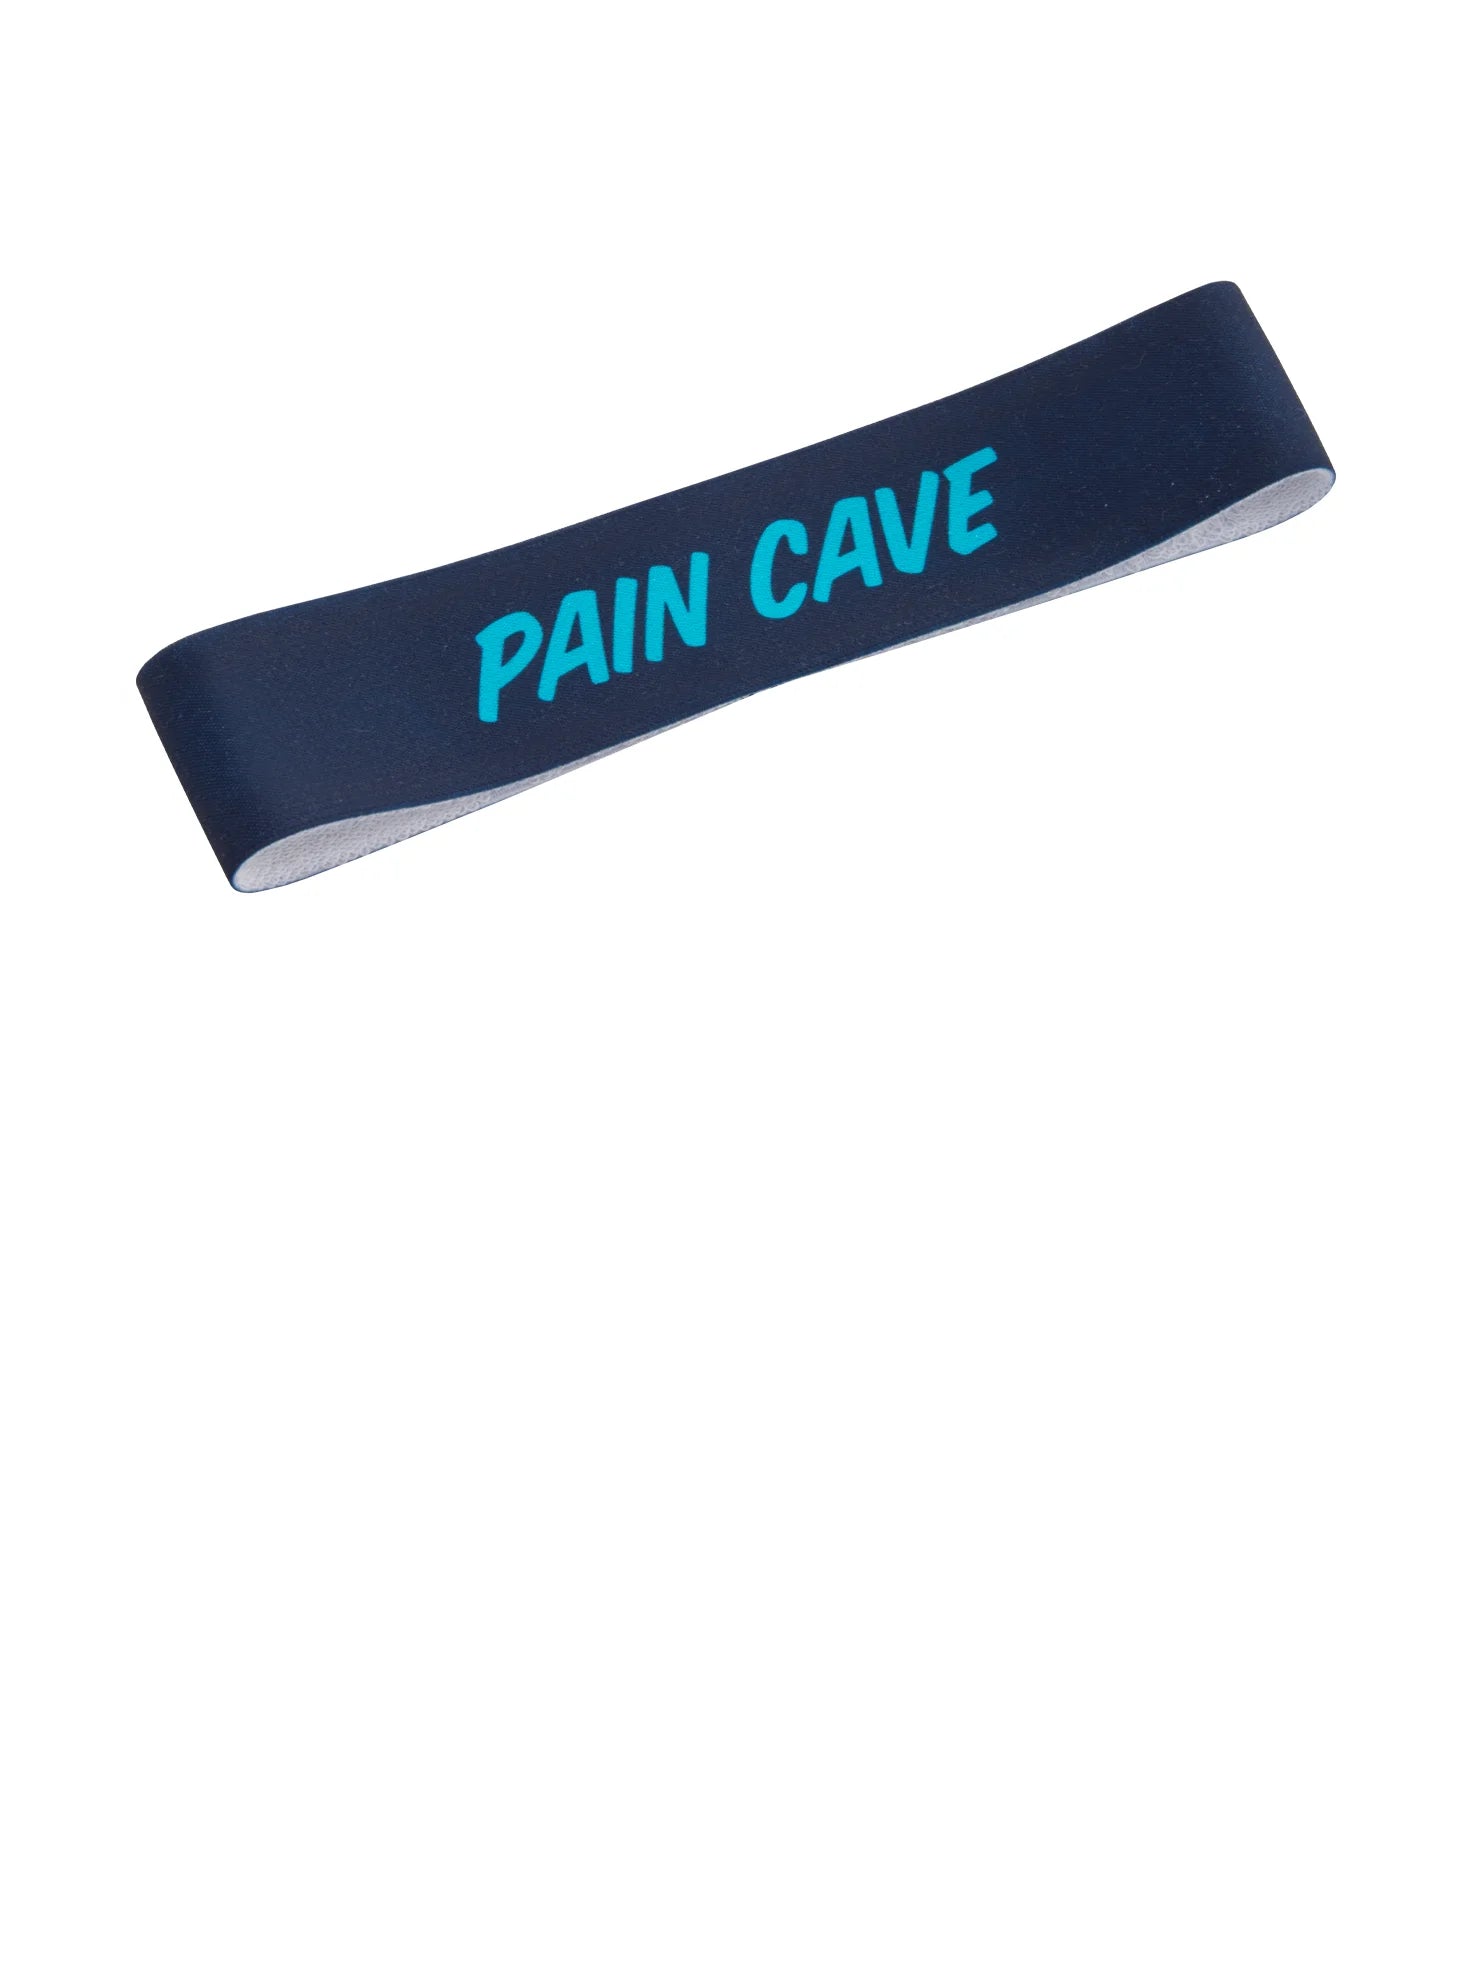 PAIN CAVE KIT with FREE TURBO Towel & Headband - WOMEN BLUE